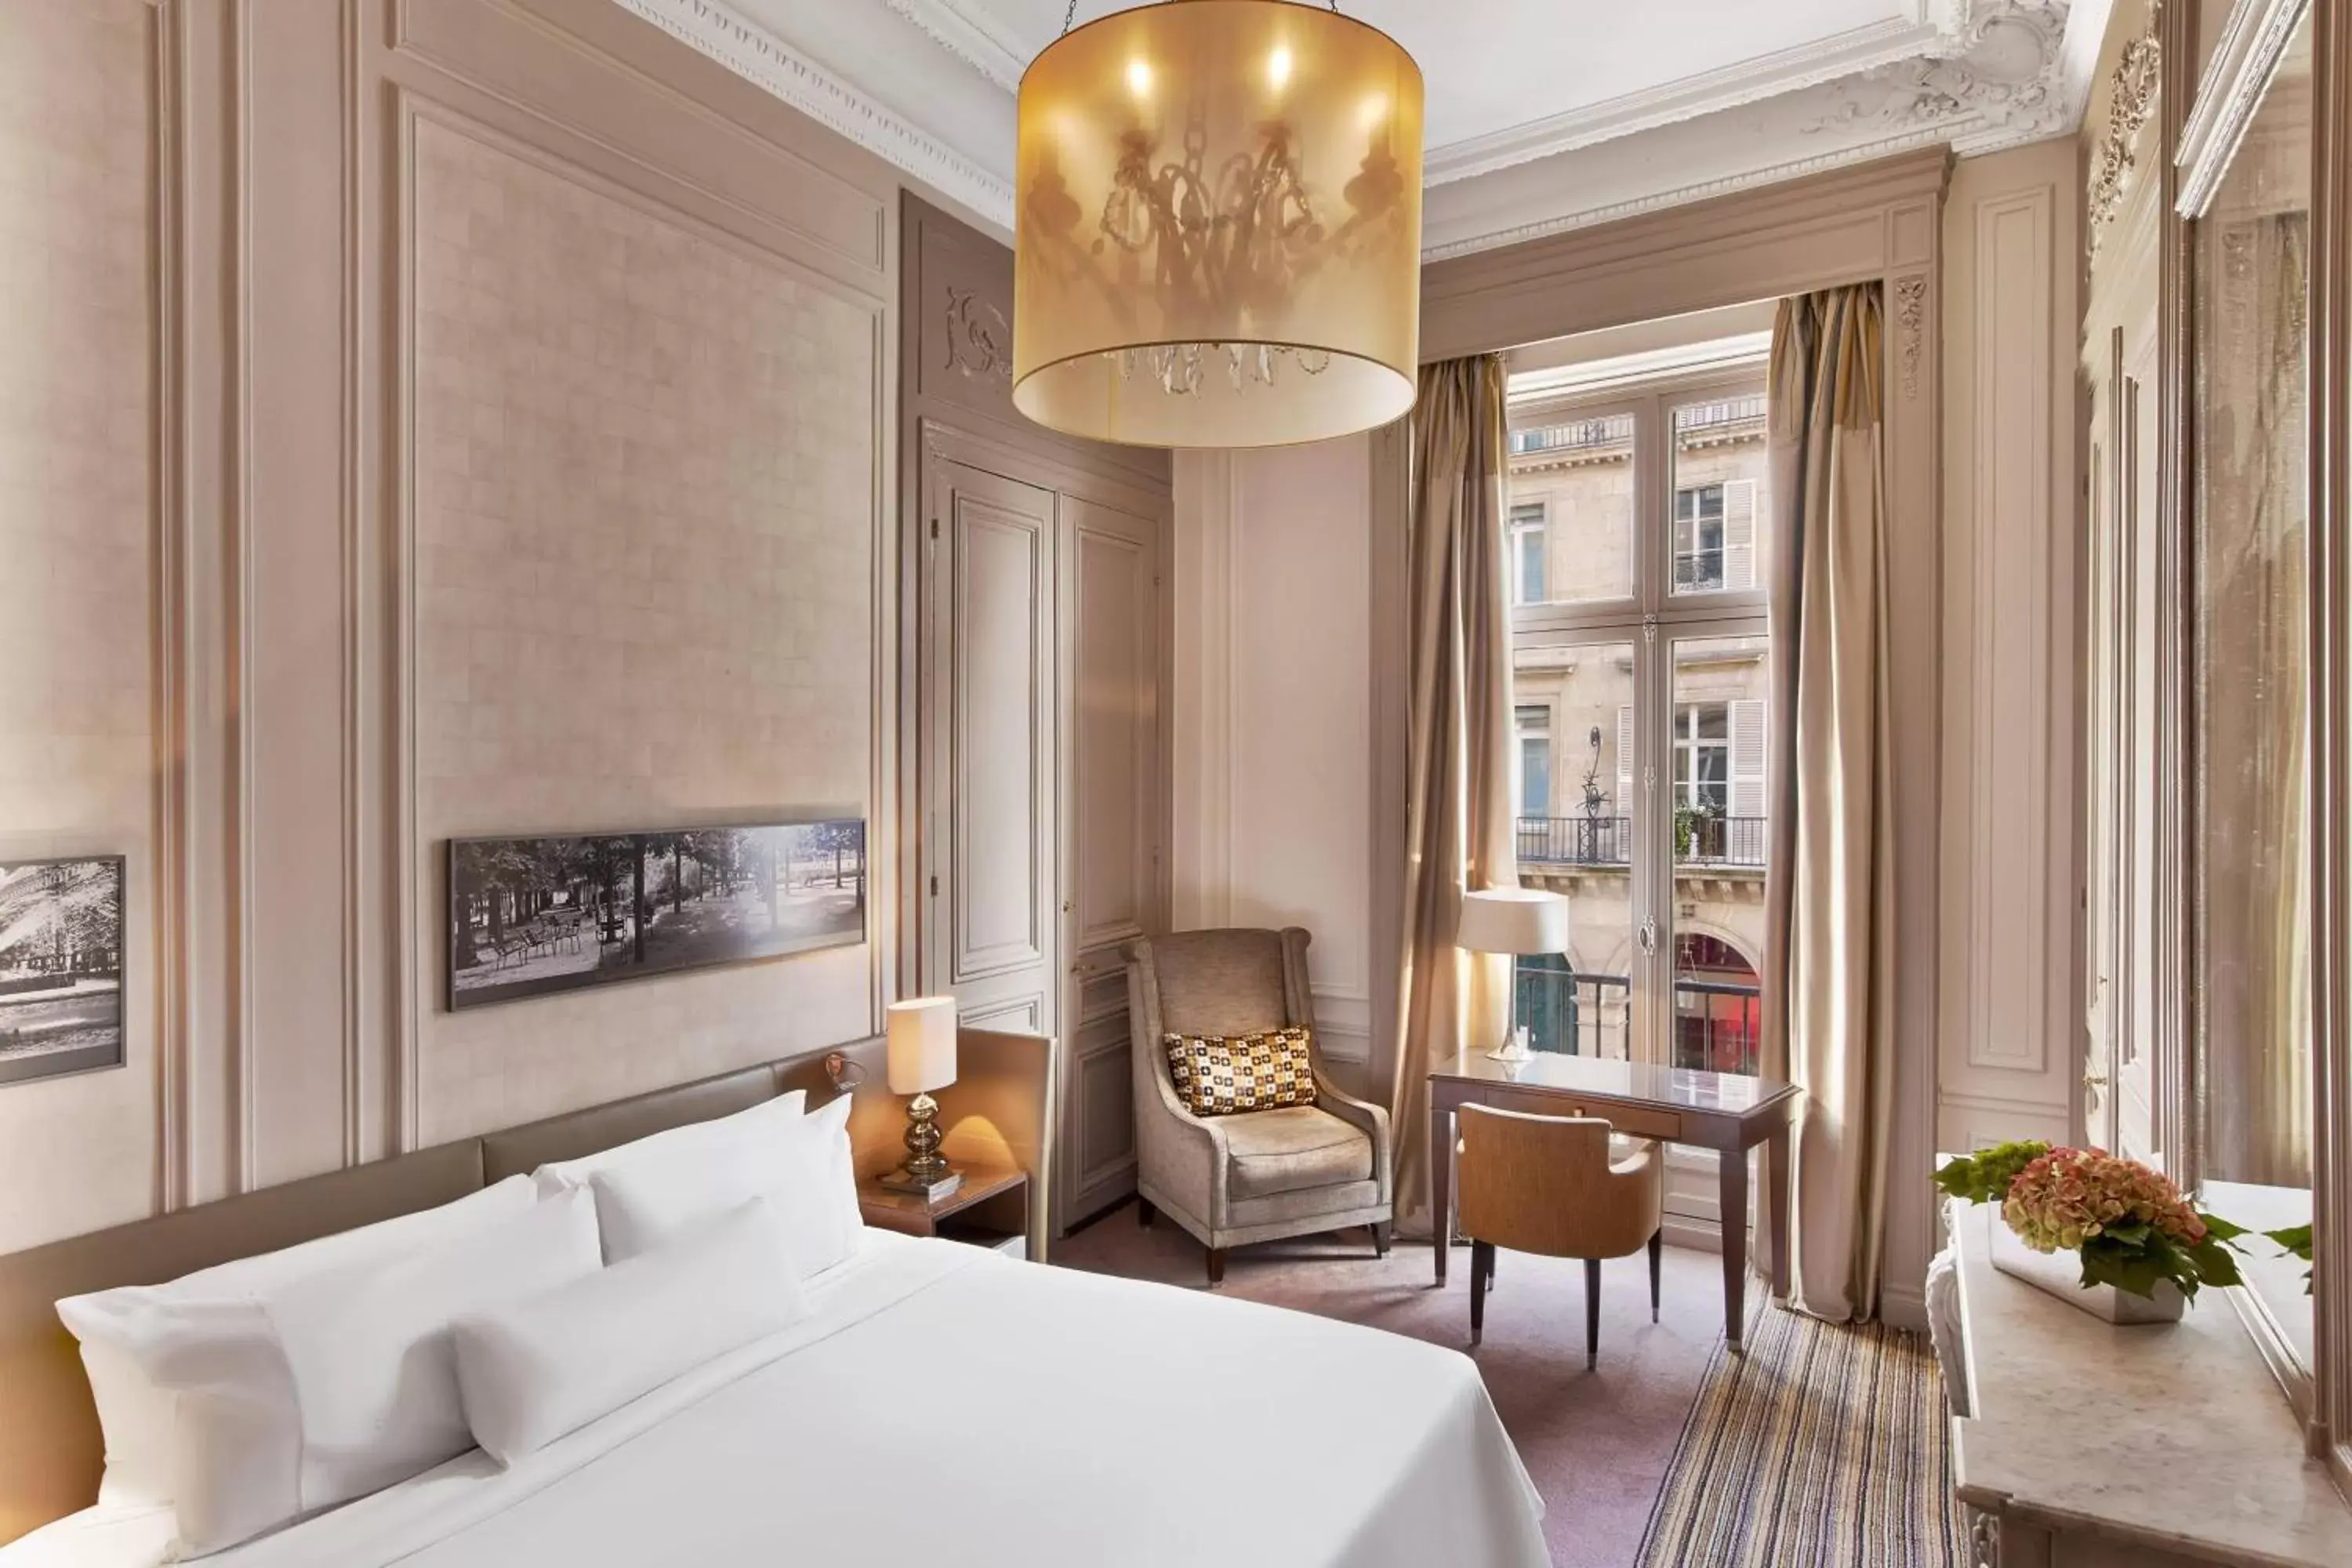 Photo of the whole room in The Westin Paris - Vendôme